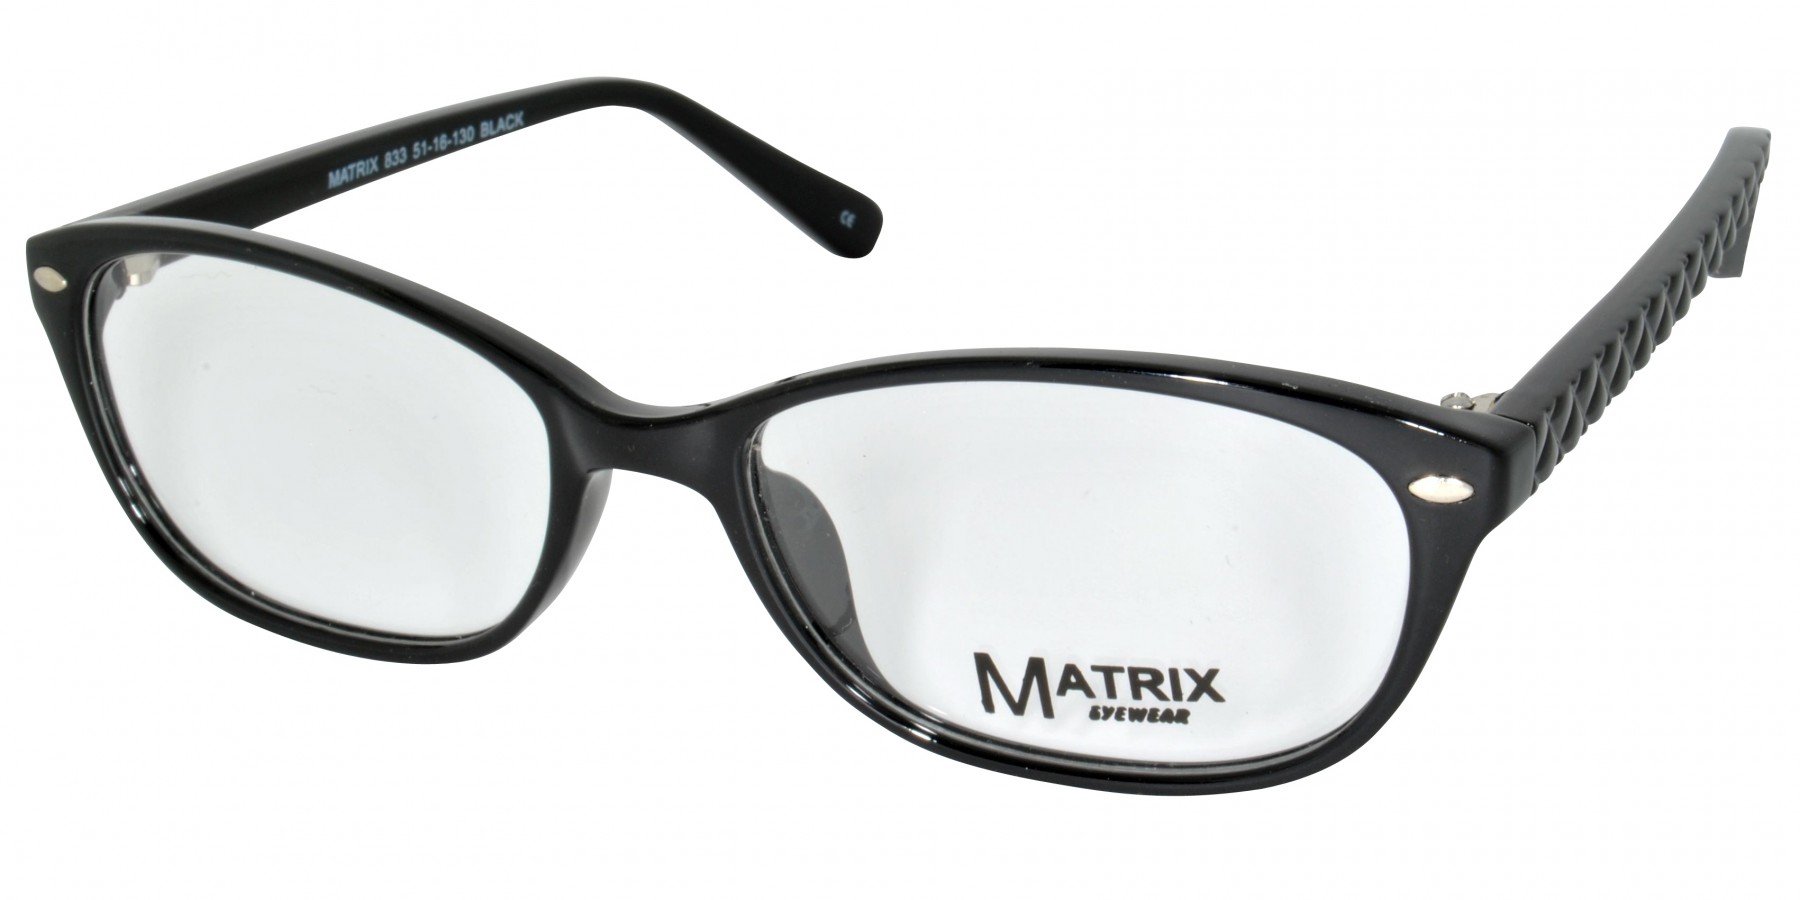 Matrix 833 Prescription Glasses